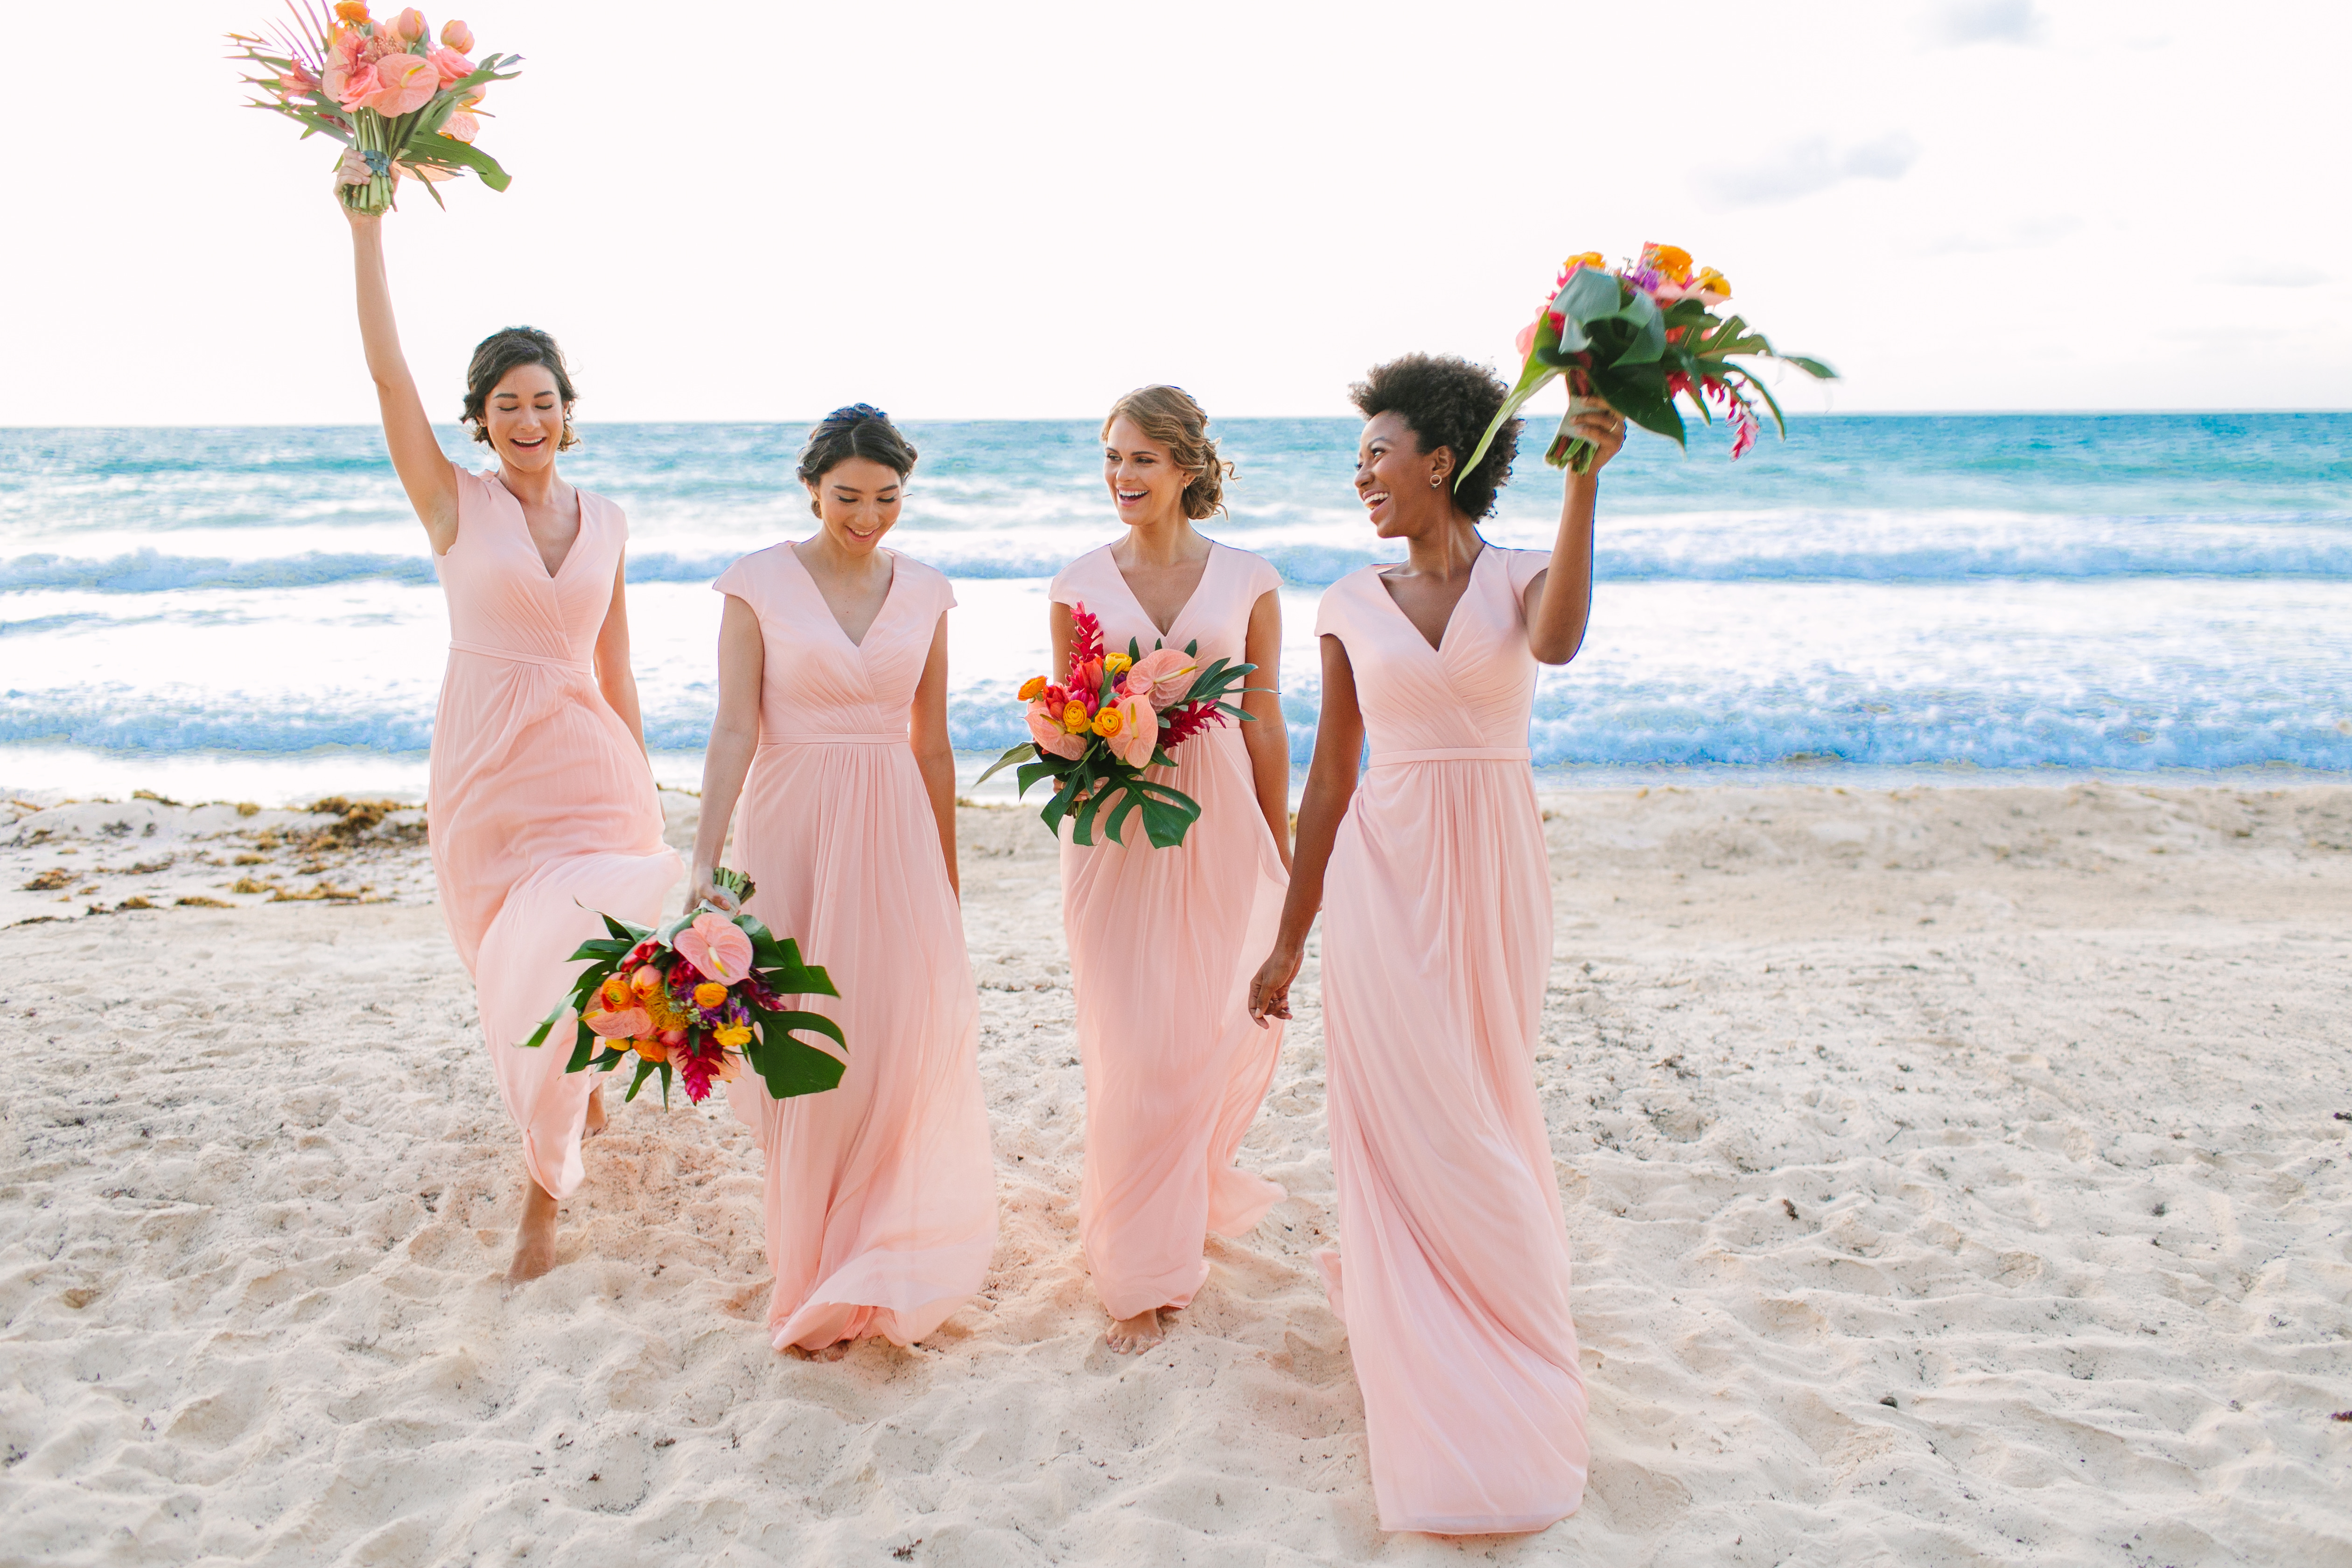 beach wedding attire for bridesmaid